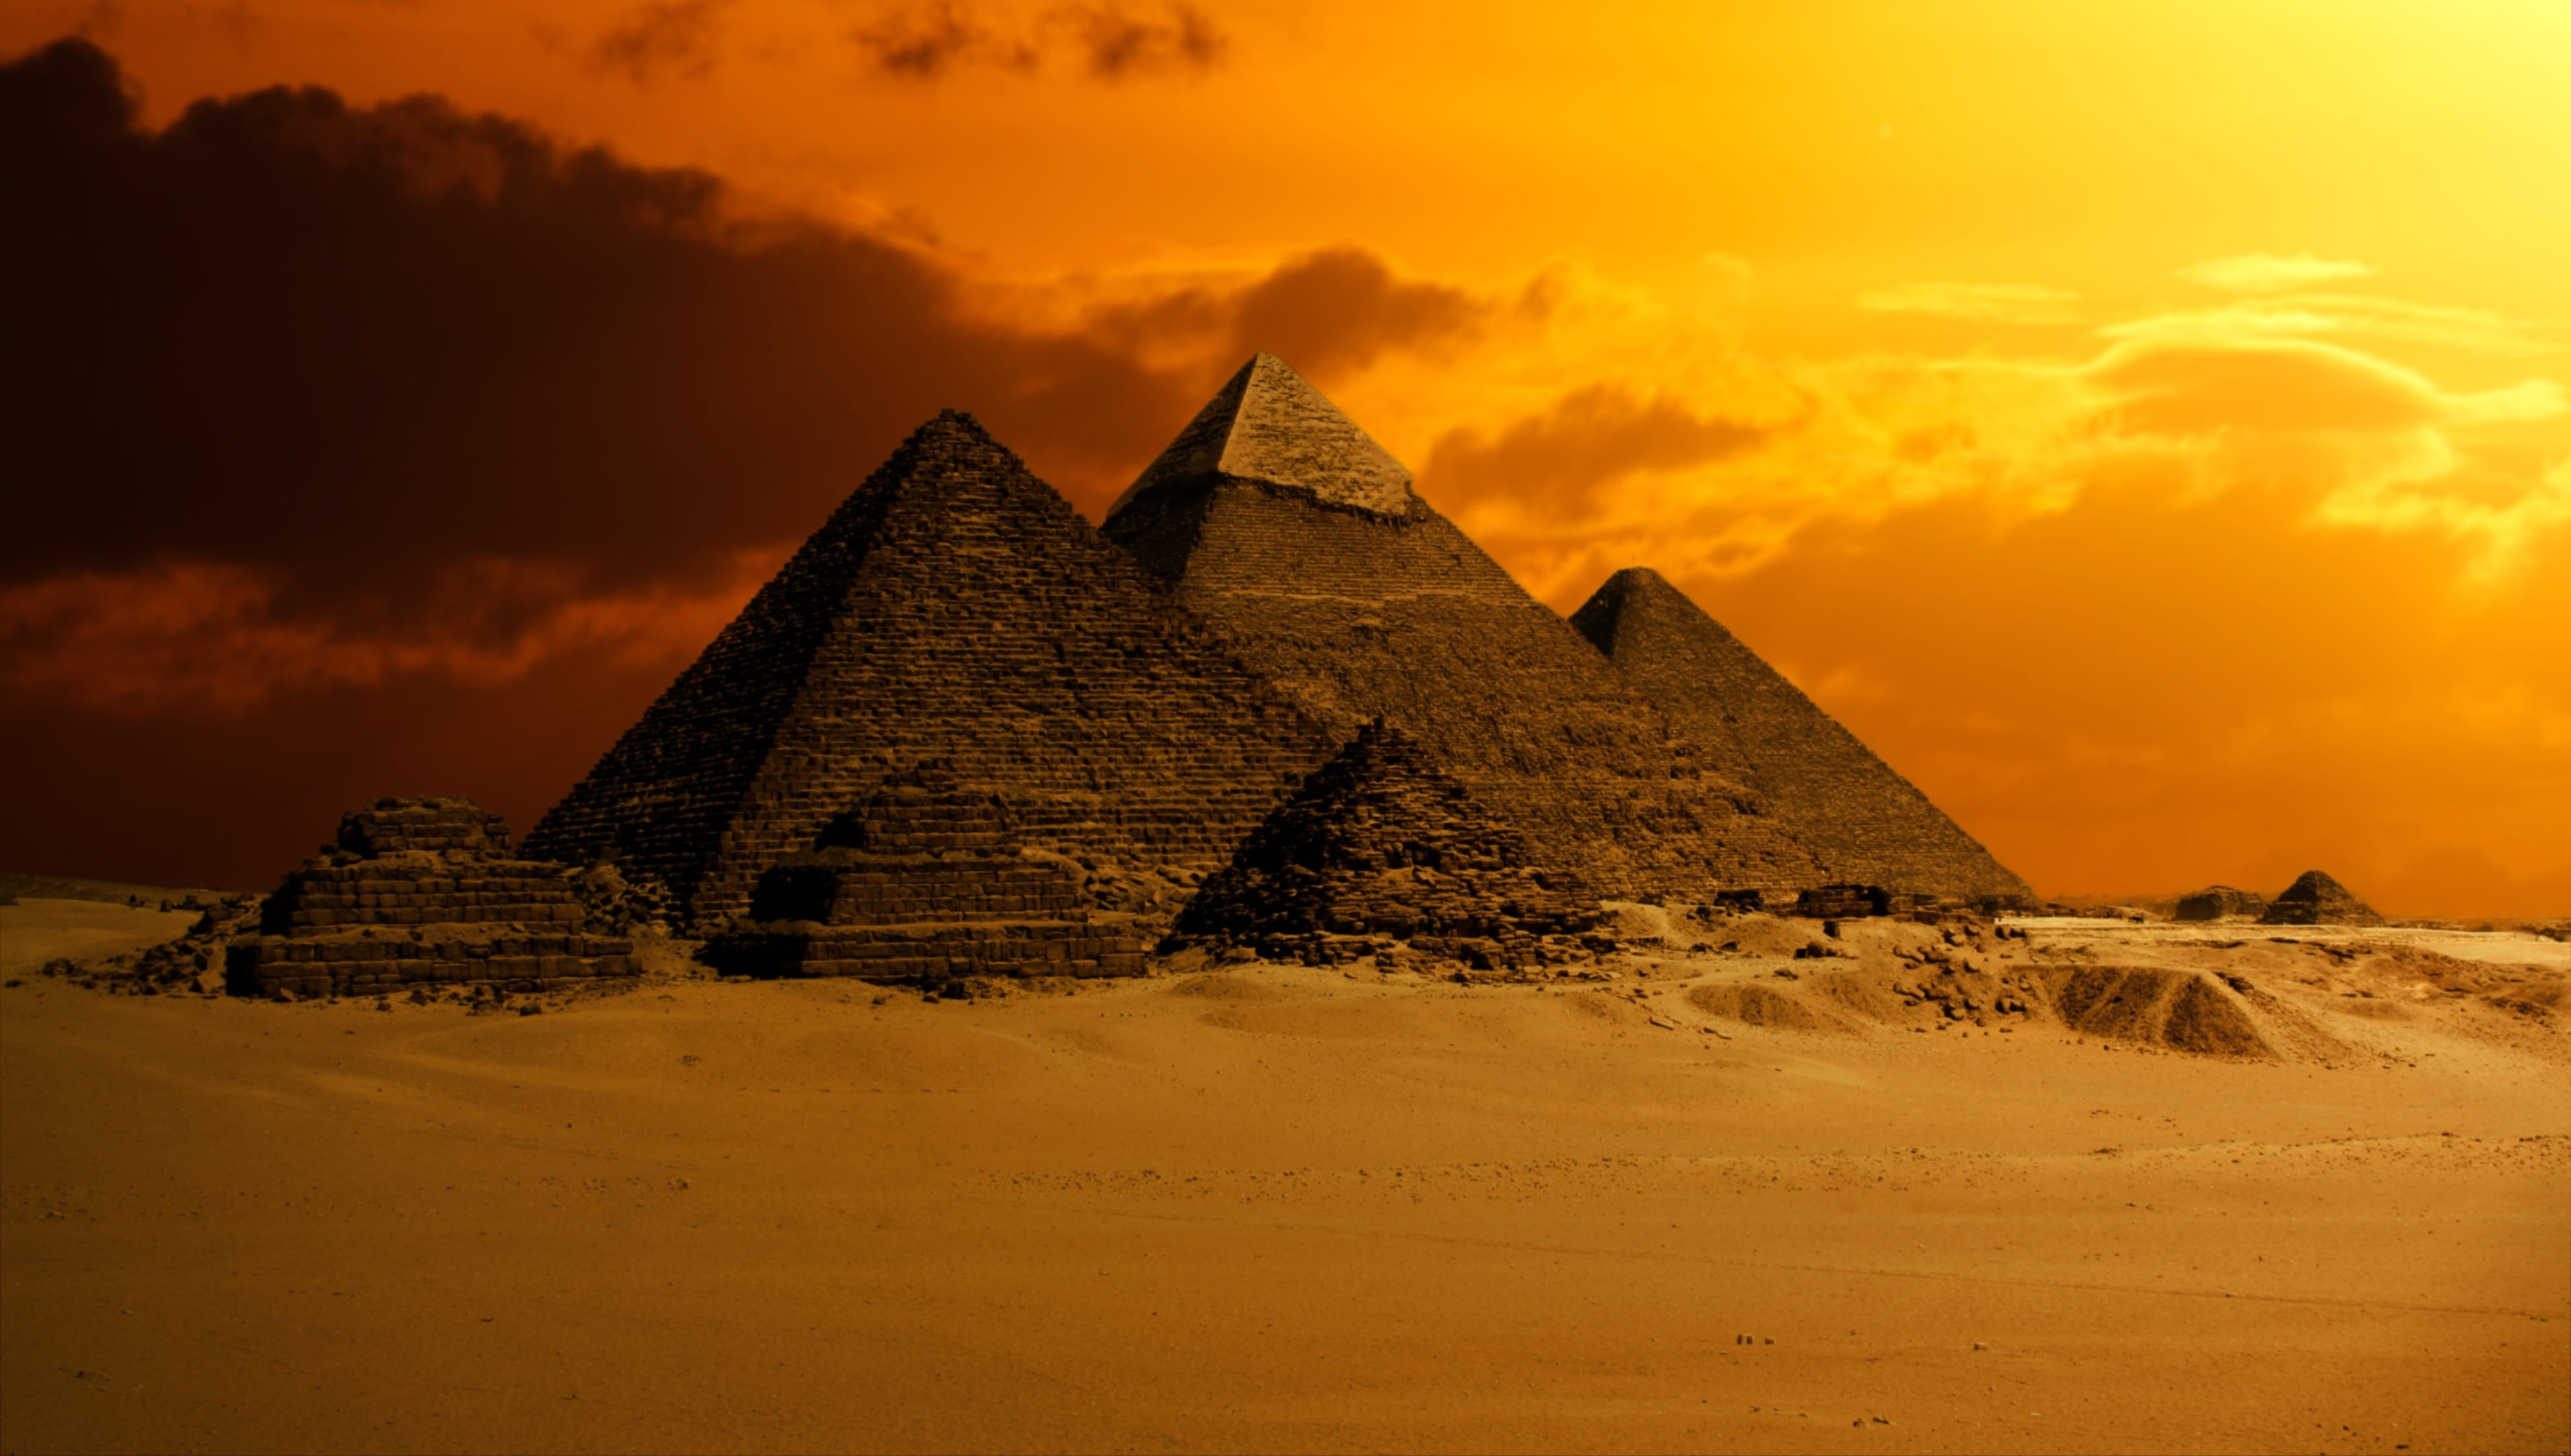 Pyramids of Giza digital wallpaper, sky, desert, ancient, egypt